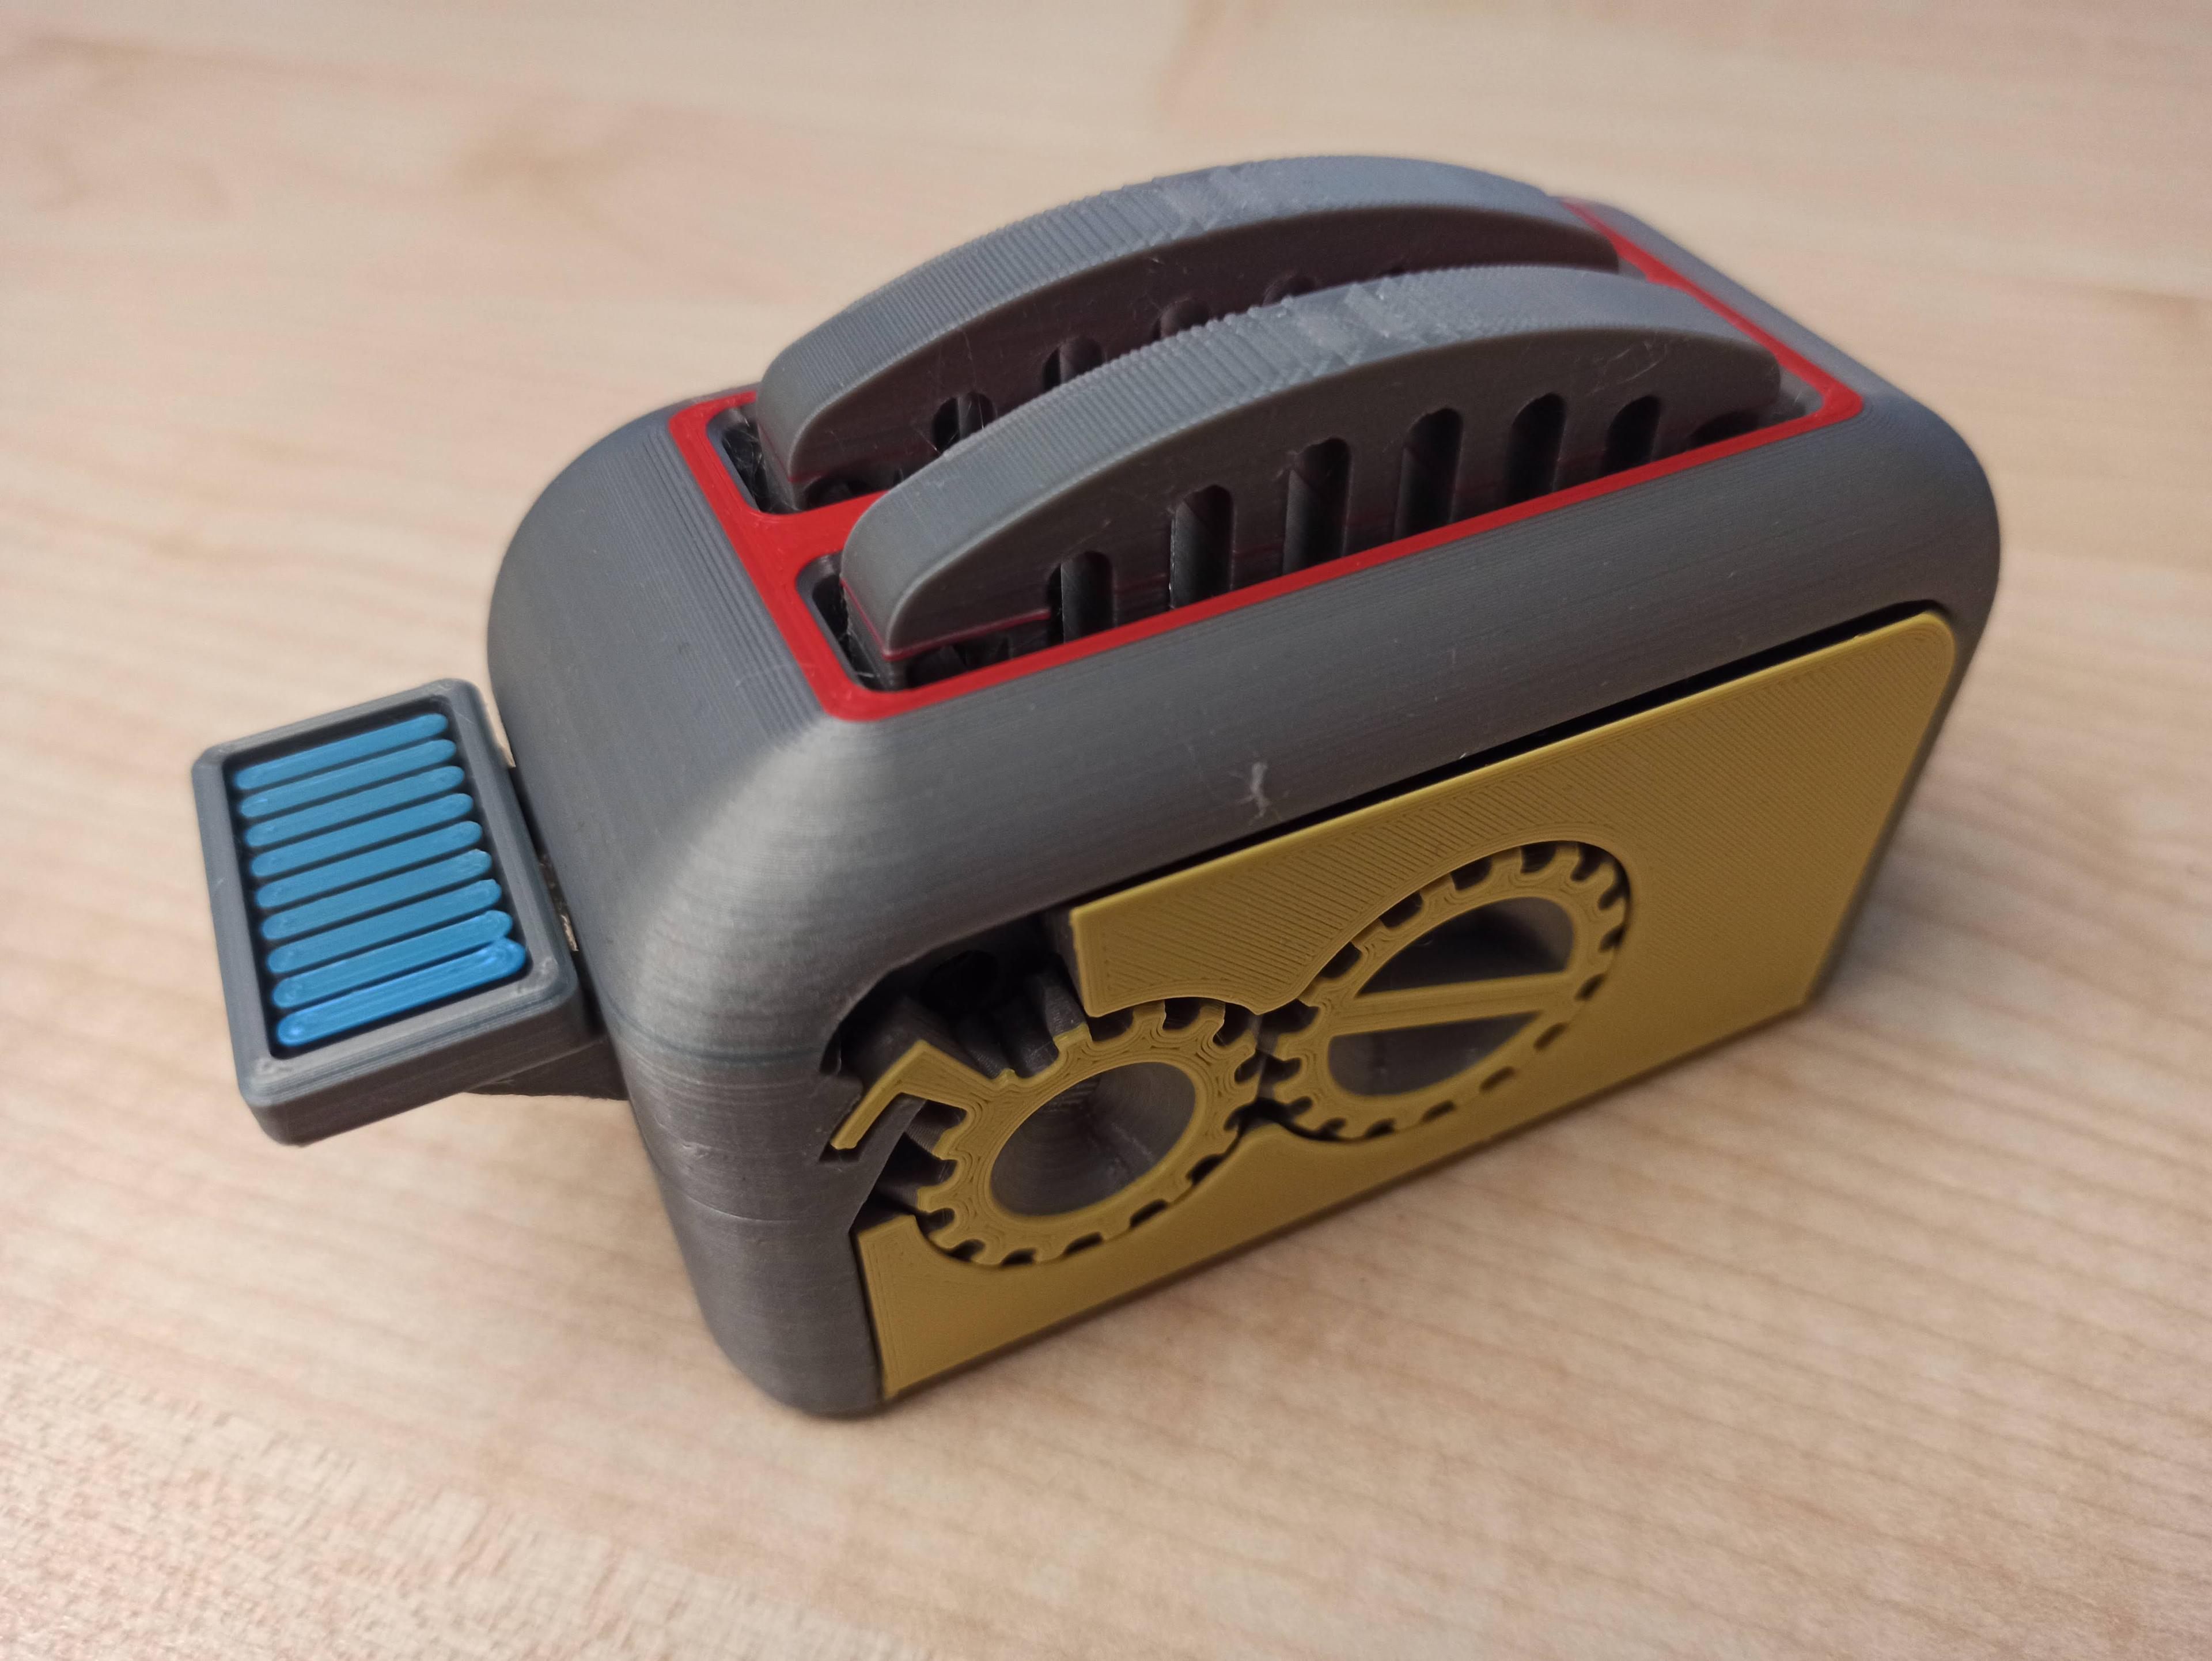 Clockspring3D Torture Toaster - Ender 3v2 0.4 steel nozzle, Cura 5, super quality settings, ~33 printing hours - 3d model